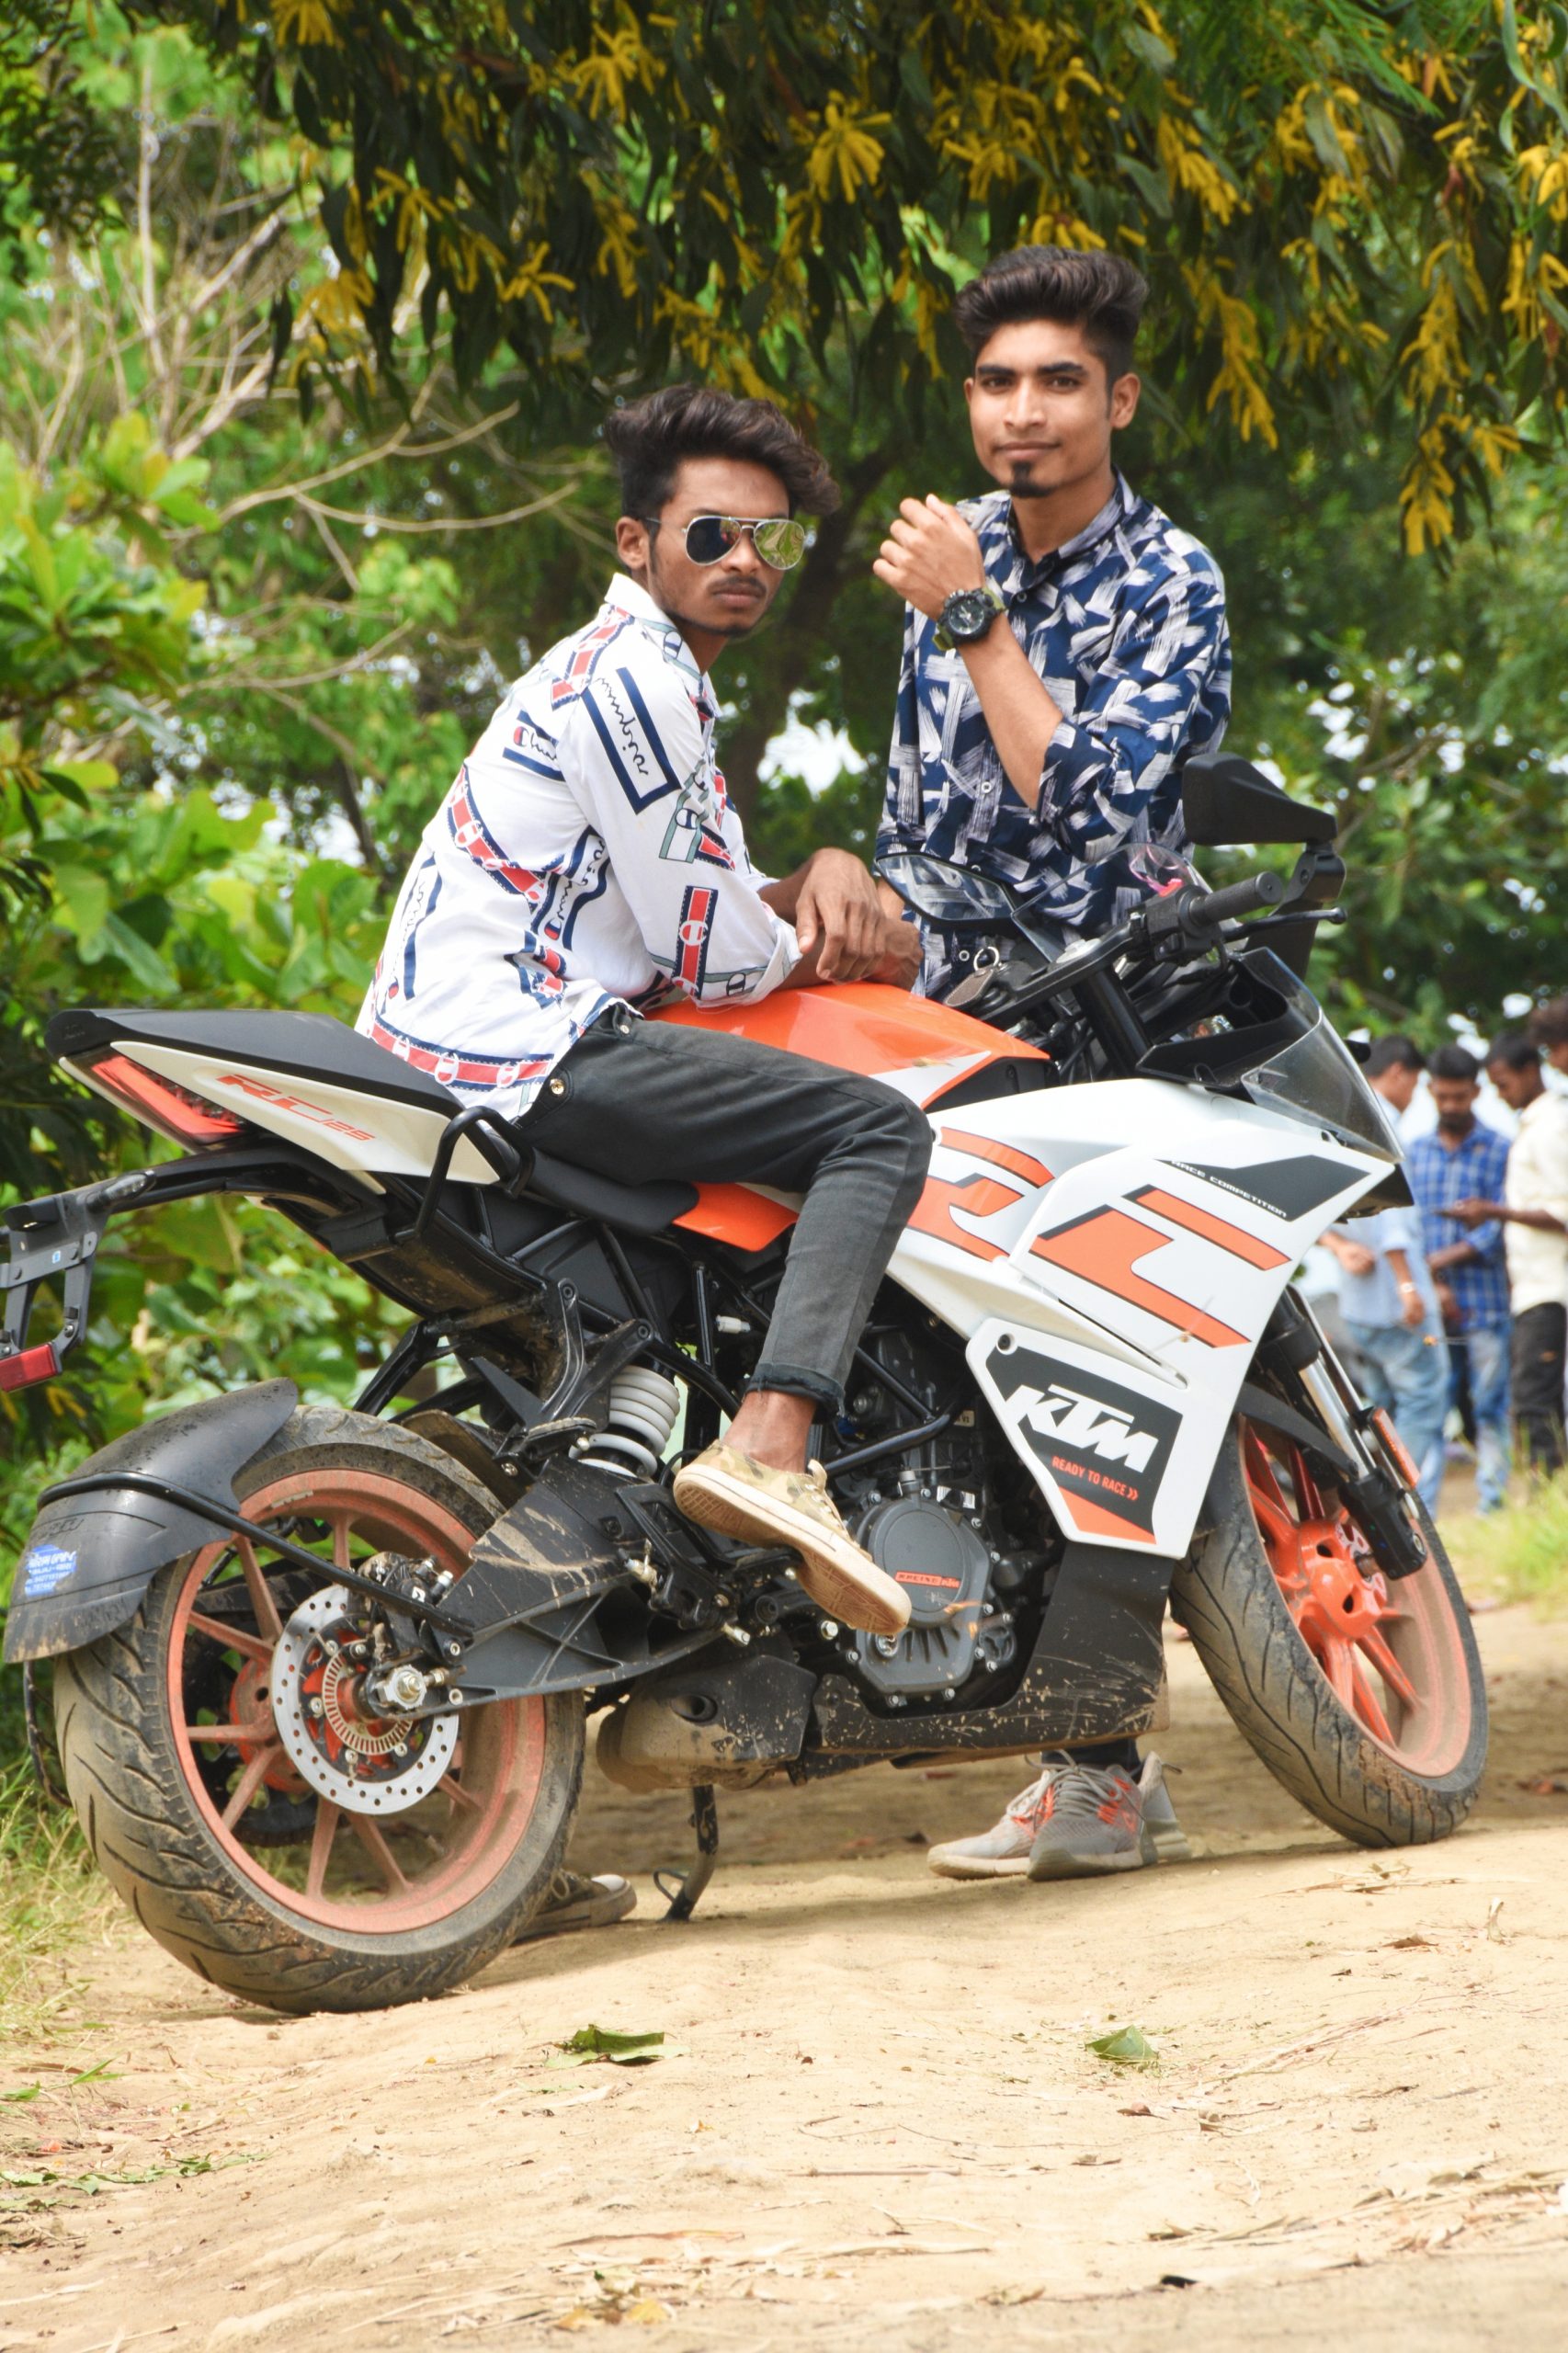 Boys posing on KTM bike